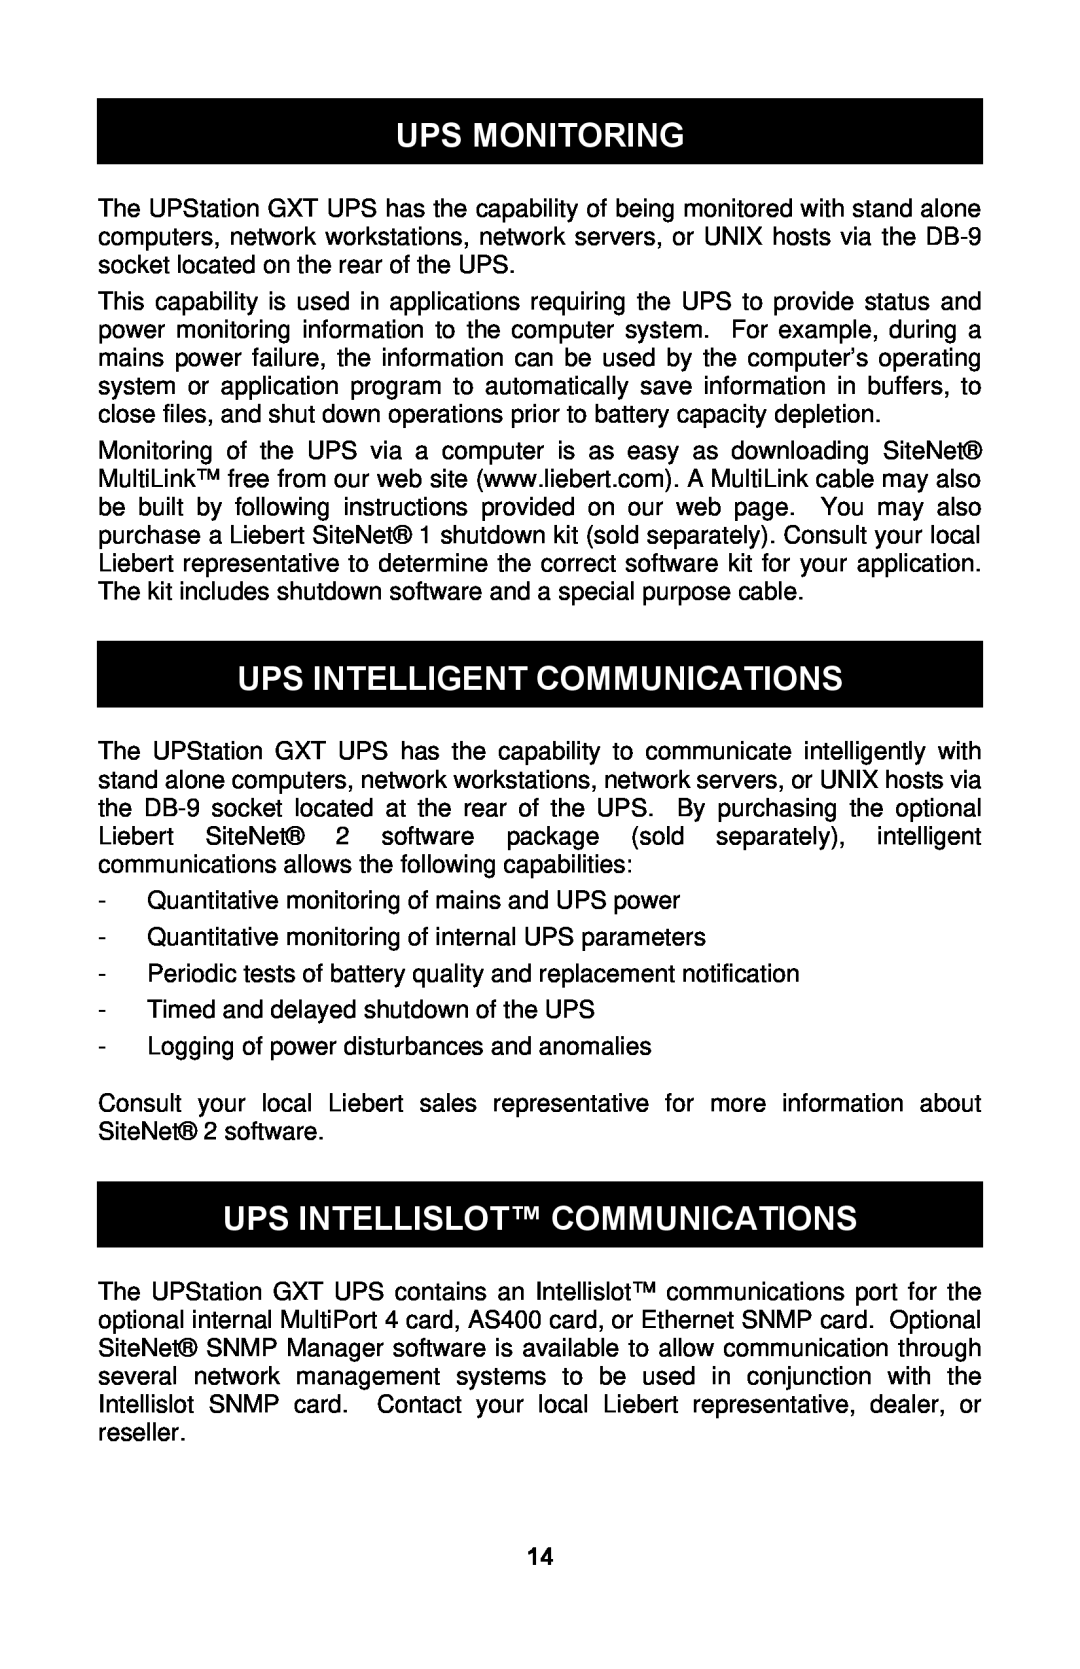 Liebert GXTTM user manual Ups Monitoring, Ups Intelligent Communications, Ups Intellislot Communications 